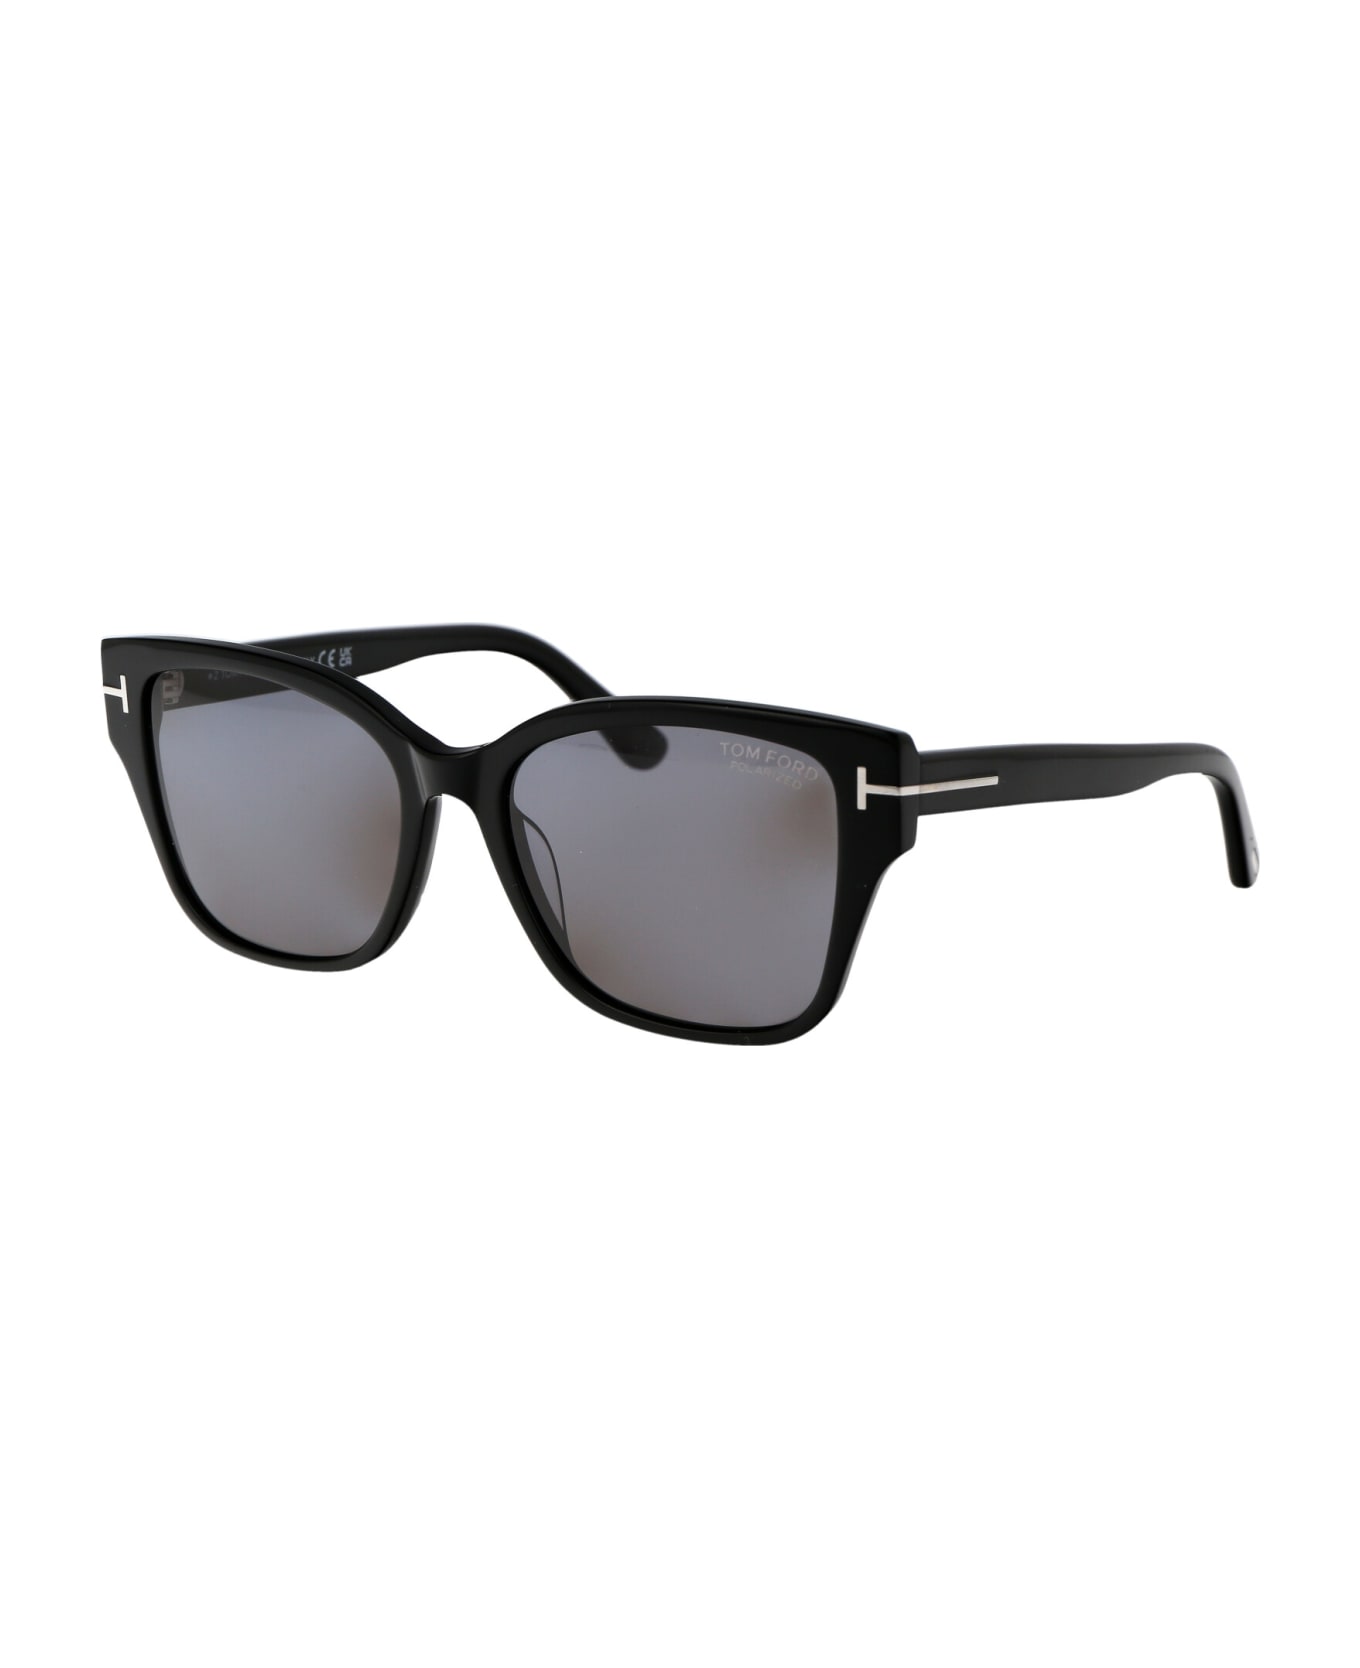 Tom Ford Eyewear Elsa Sunglasses - 01D Nero Lucido / Fumo Polar